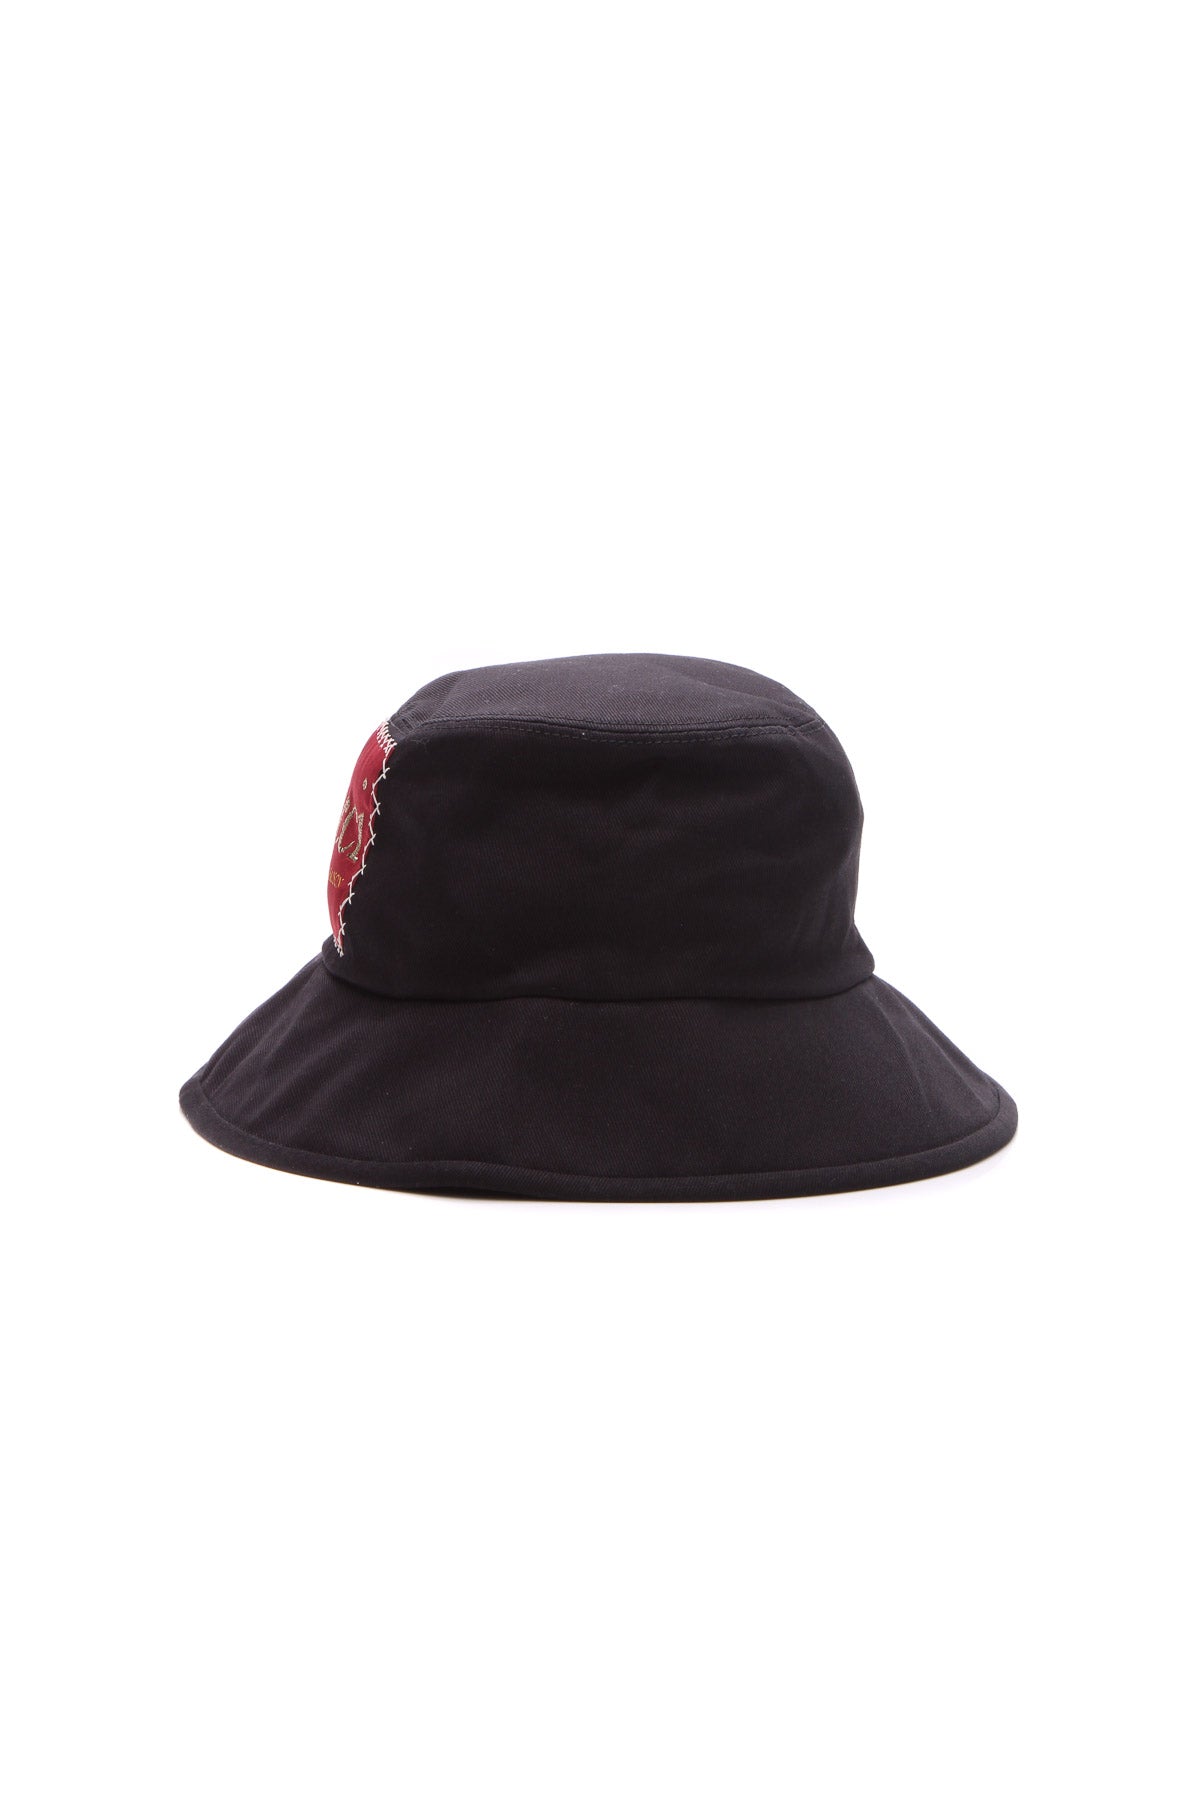 Gucci Drill Bucket Hat - Size S